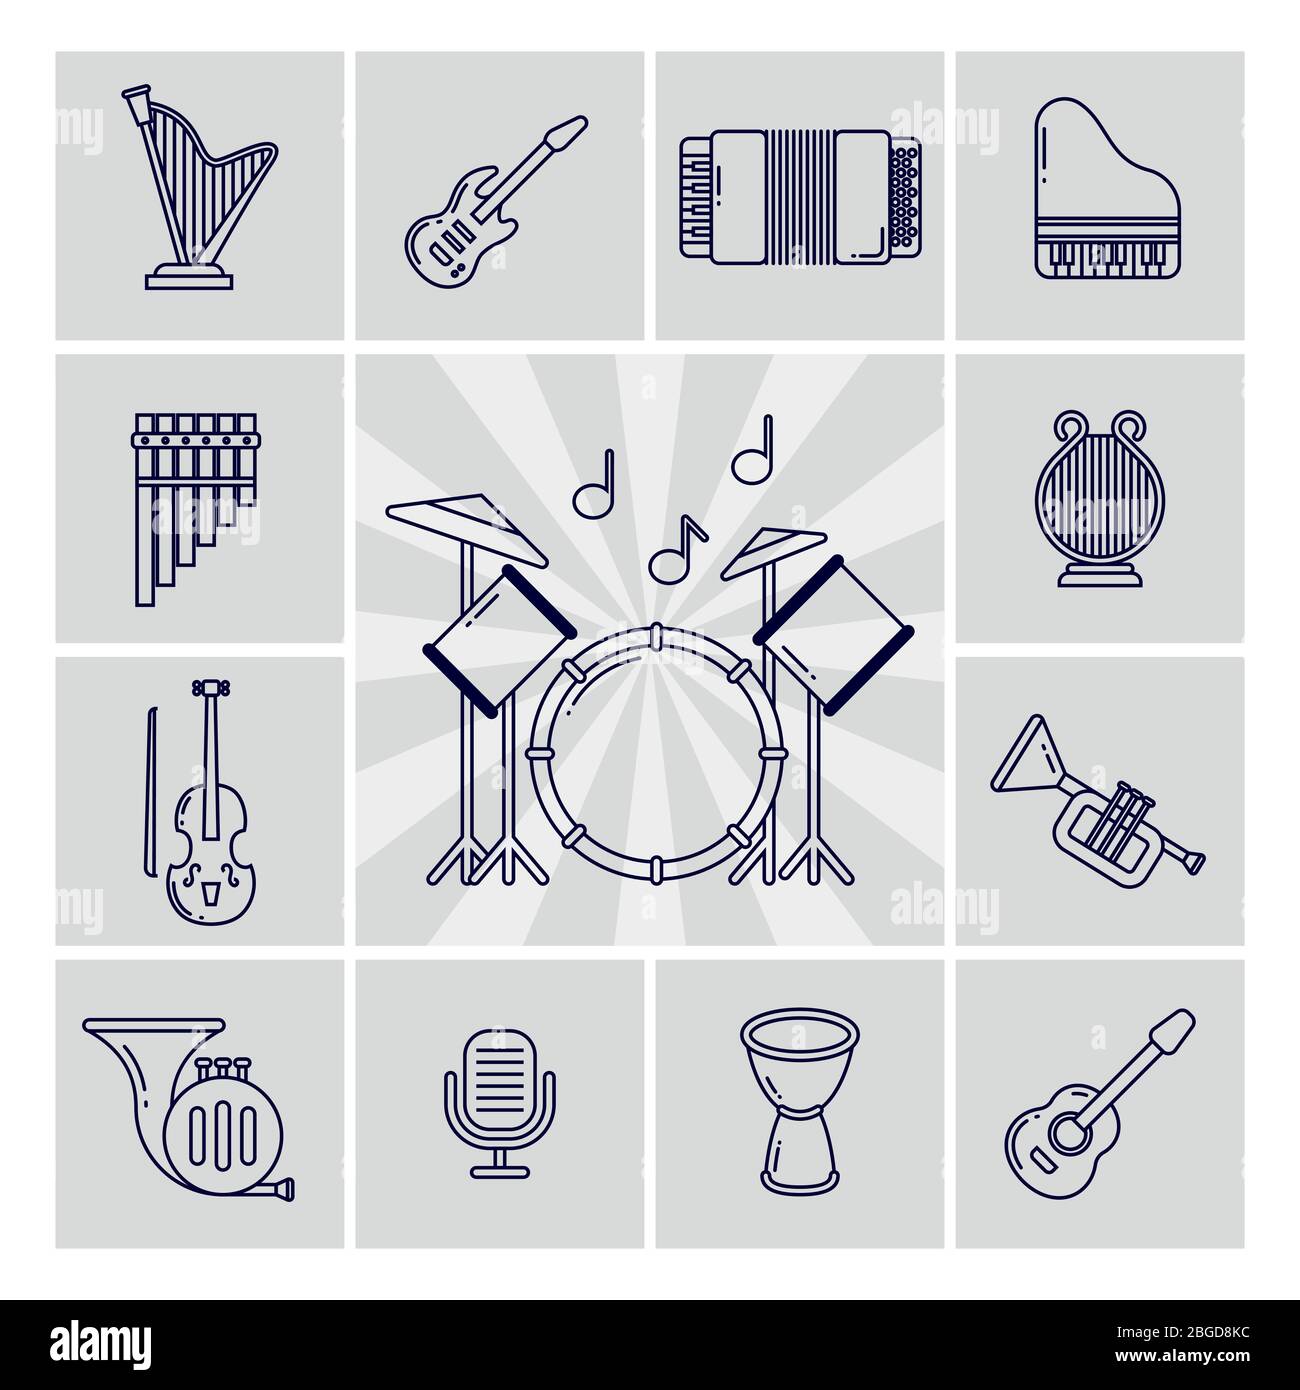 Lineare Musikinstrumente Vektor-Icons auf grauen Illustration isoliert gesetzt Stock Vektor